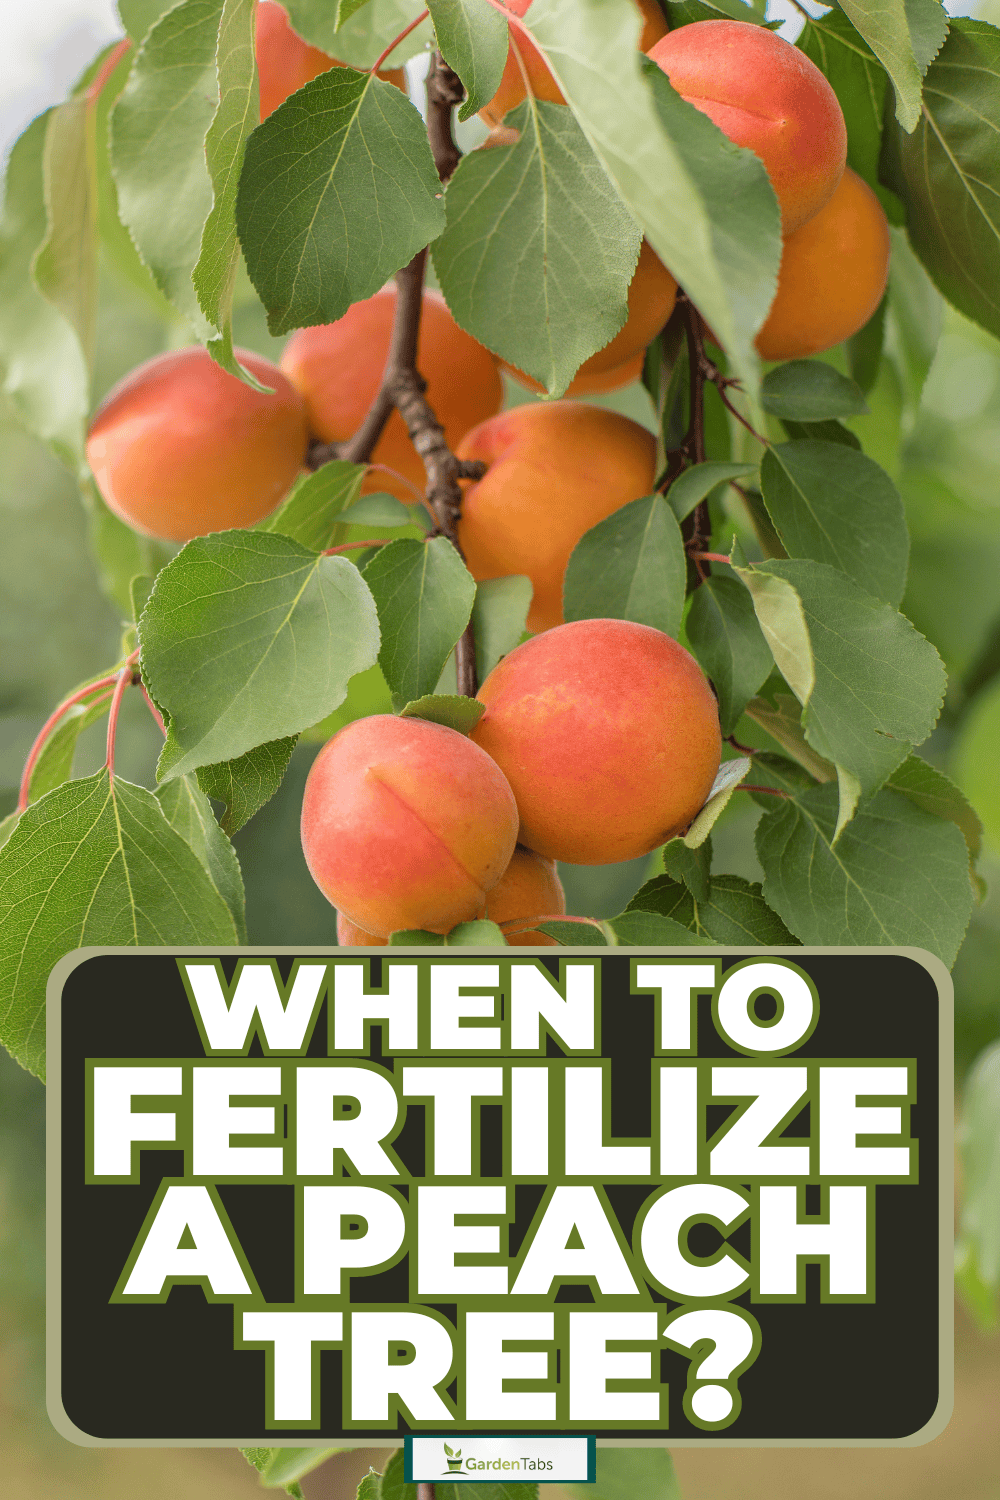 When To Fertilize A Peach Tree?